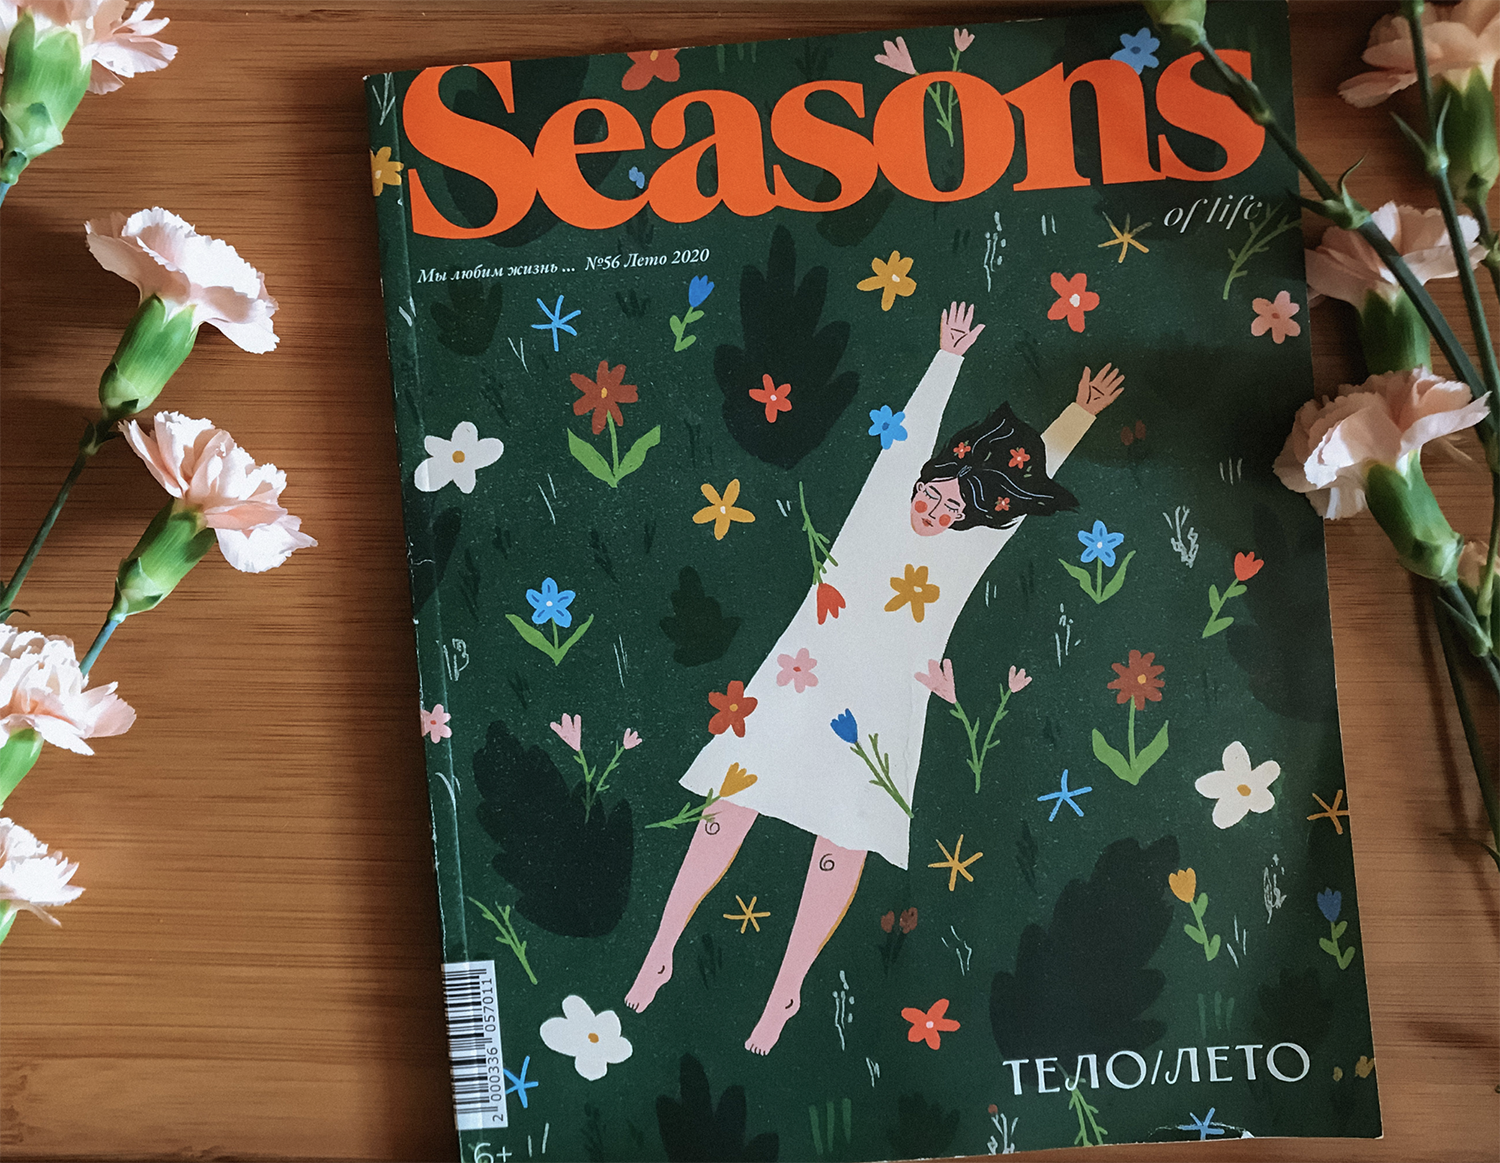 Seasons of Life журнал. Seasons журнал обложки. Еру ыуфыщты журнал. Seasons of Life разворот. Seasons 2020